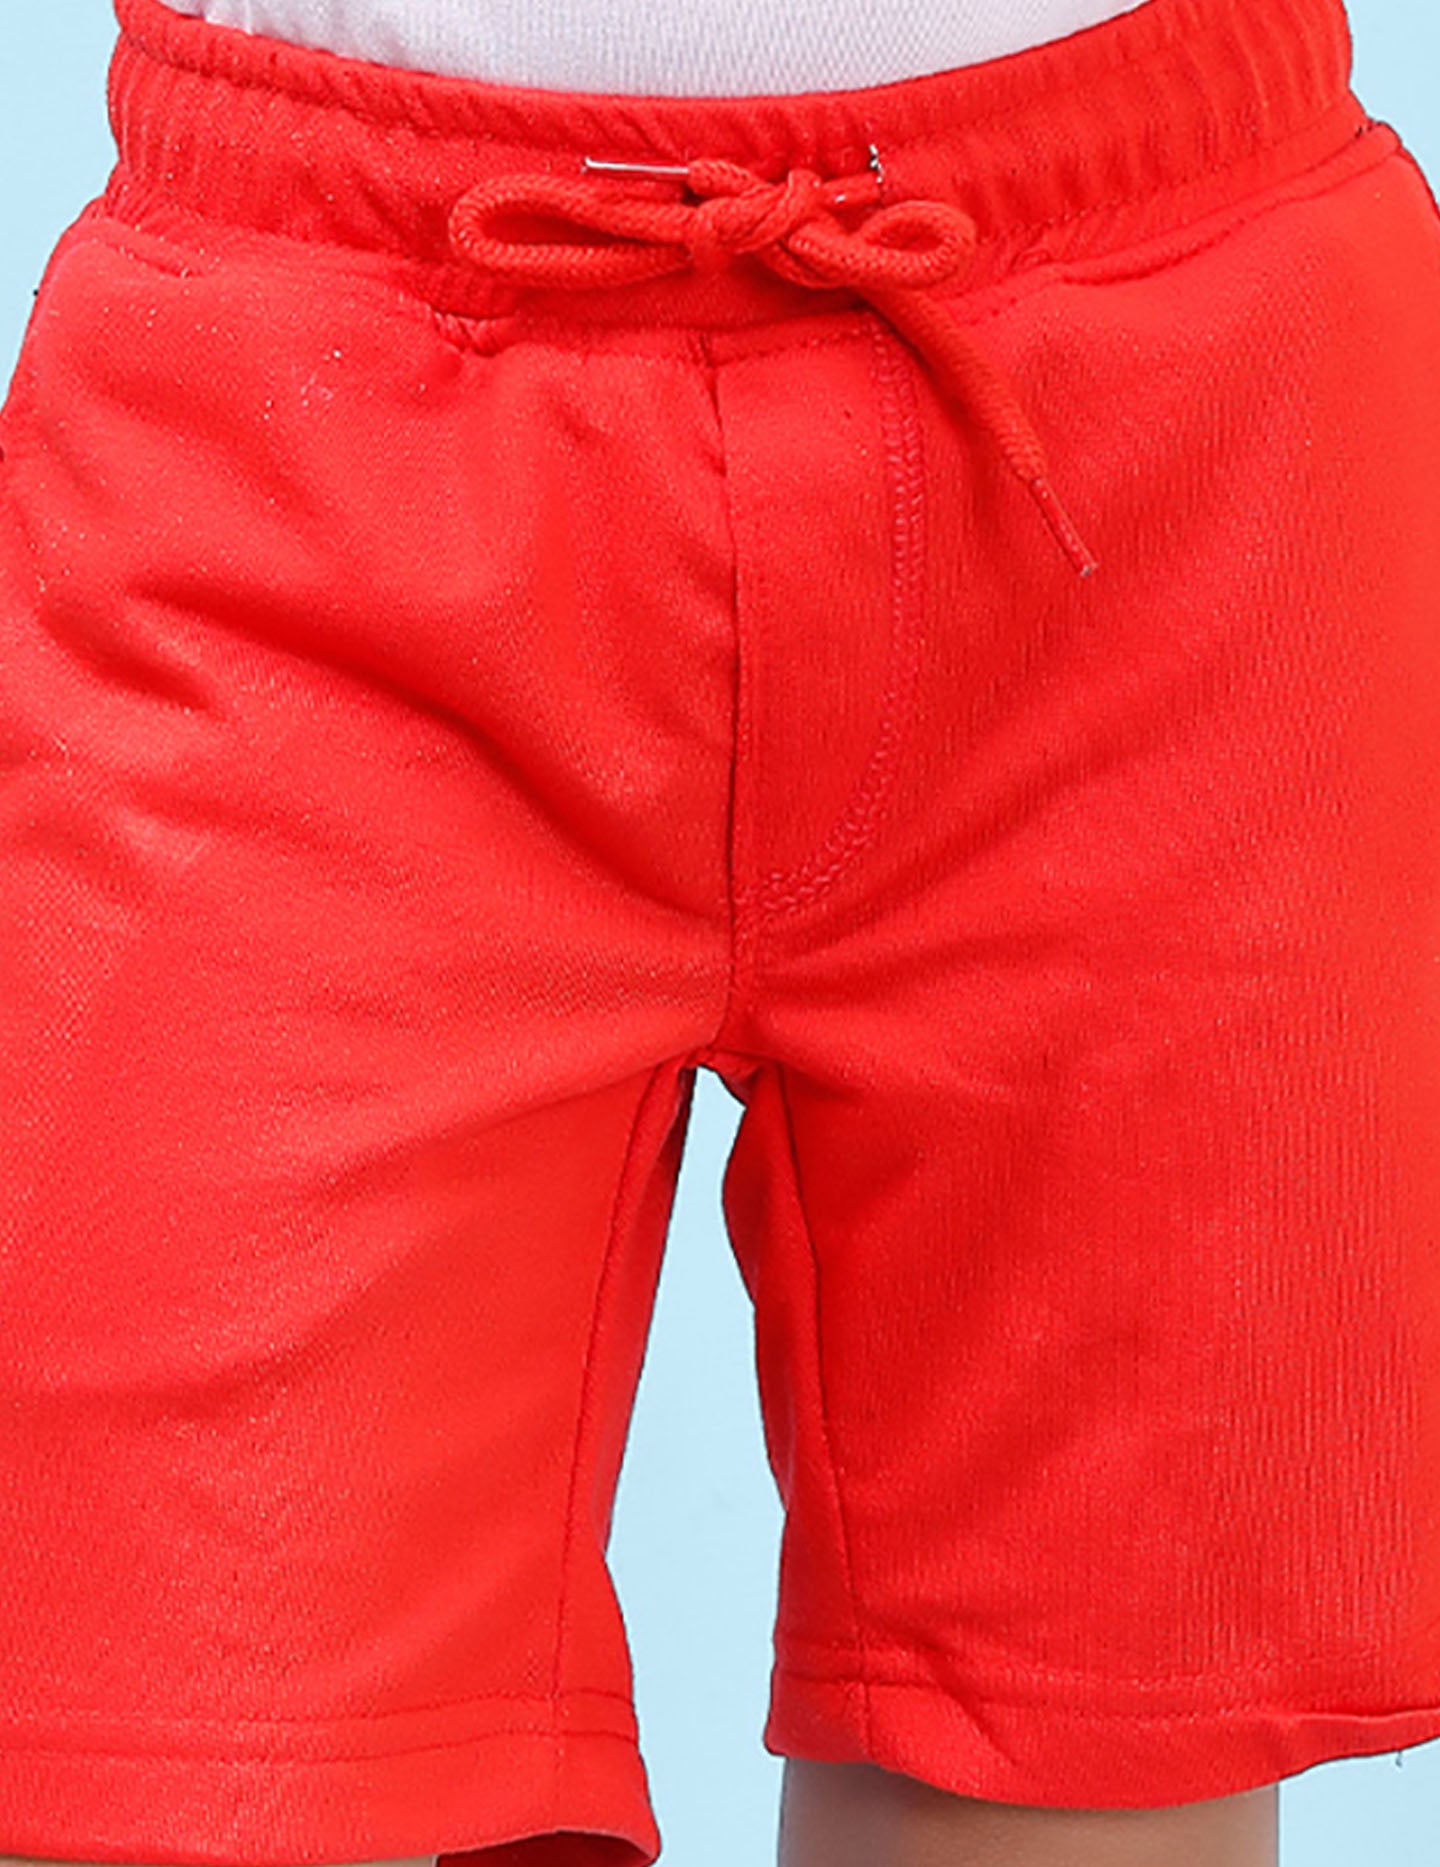 Nusyl Oh Boy  Printed Red Boys Shorts